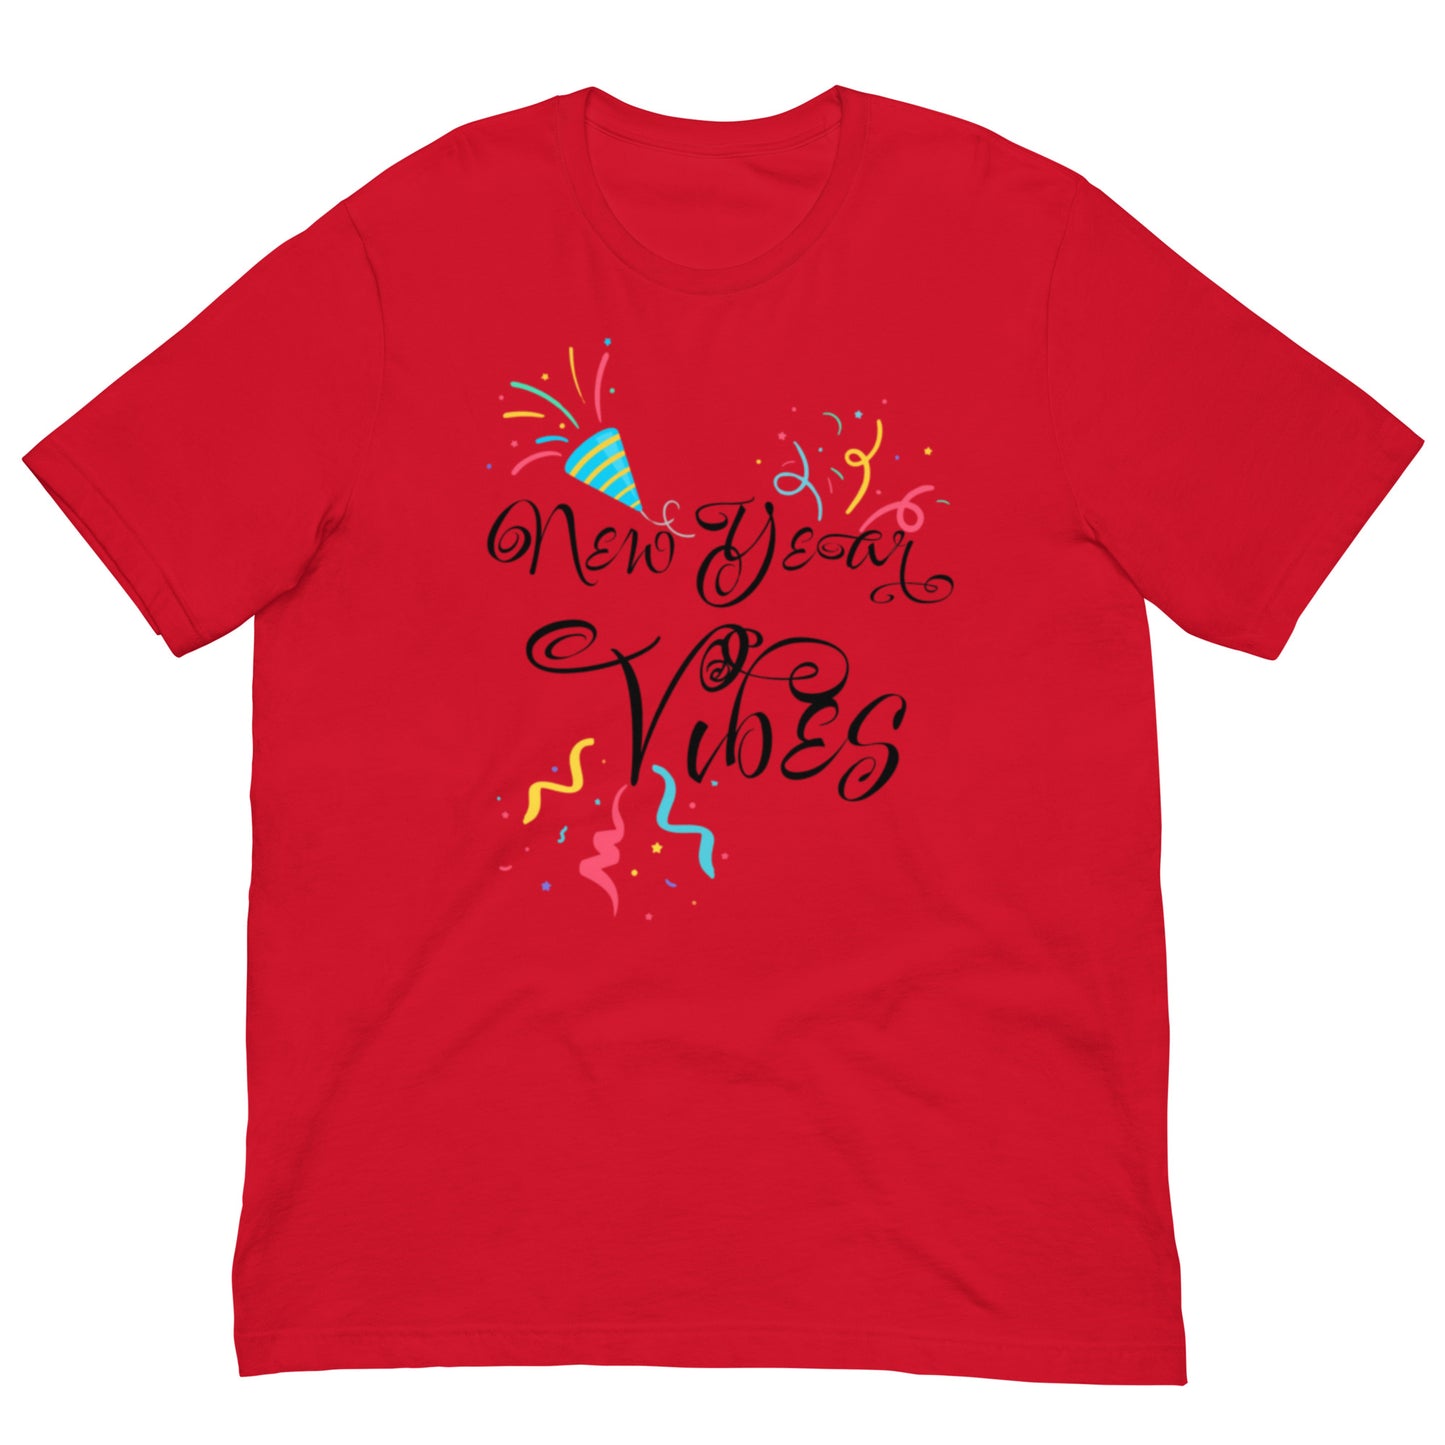 New Year Vibes Unisex t-shirt